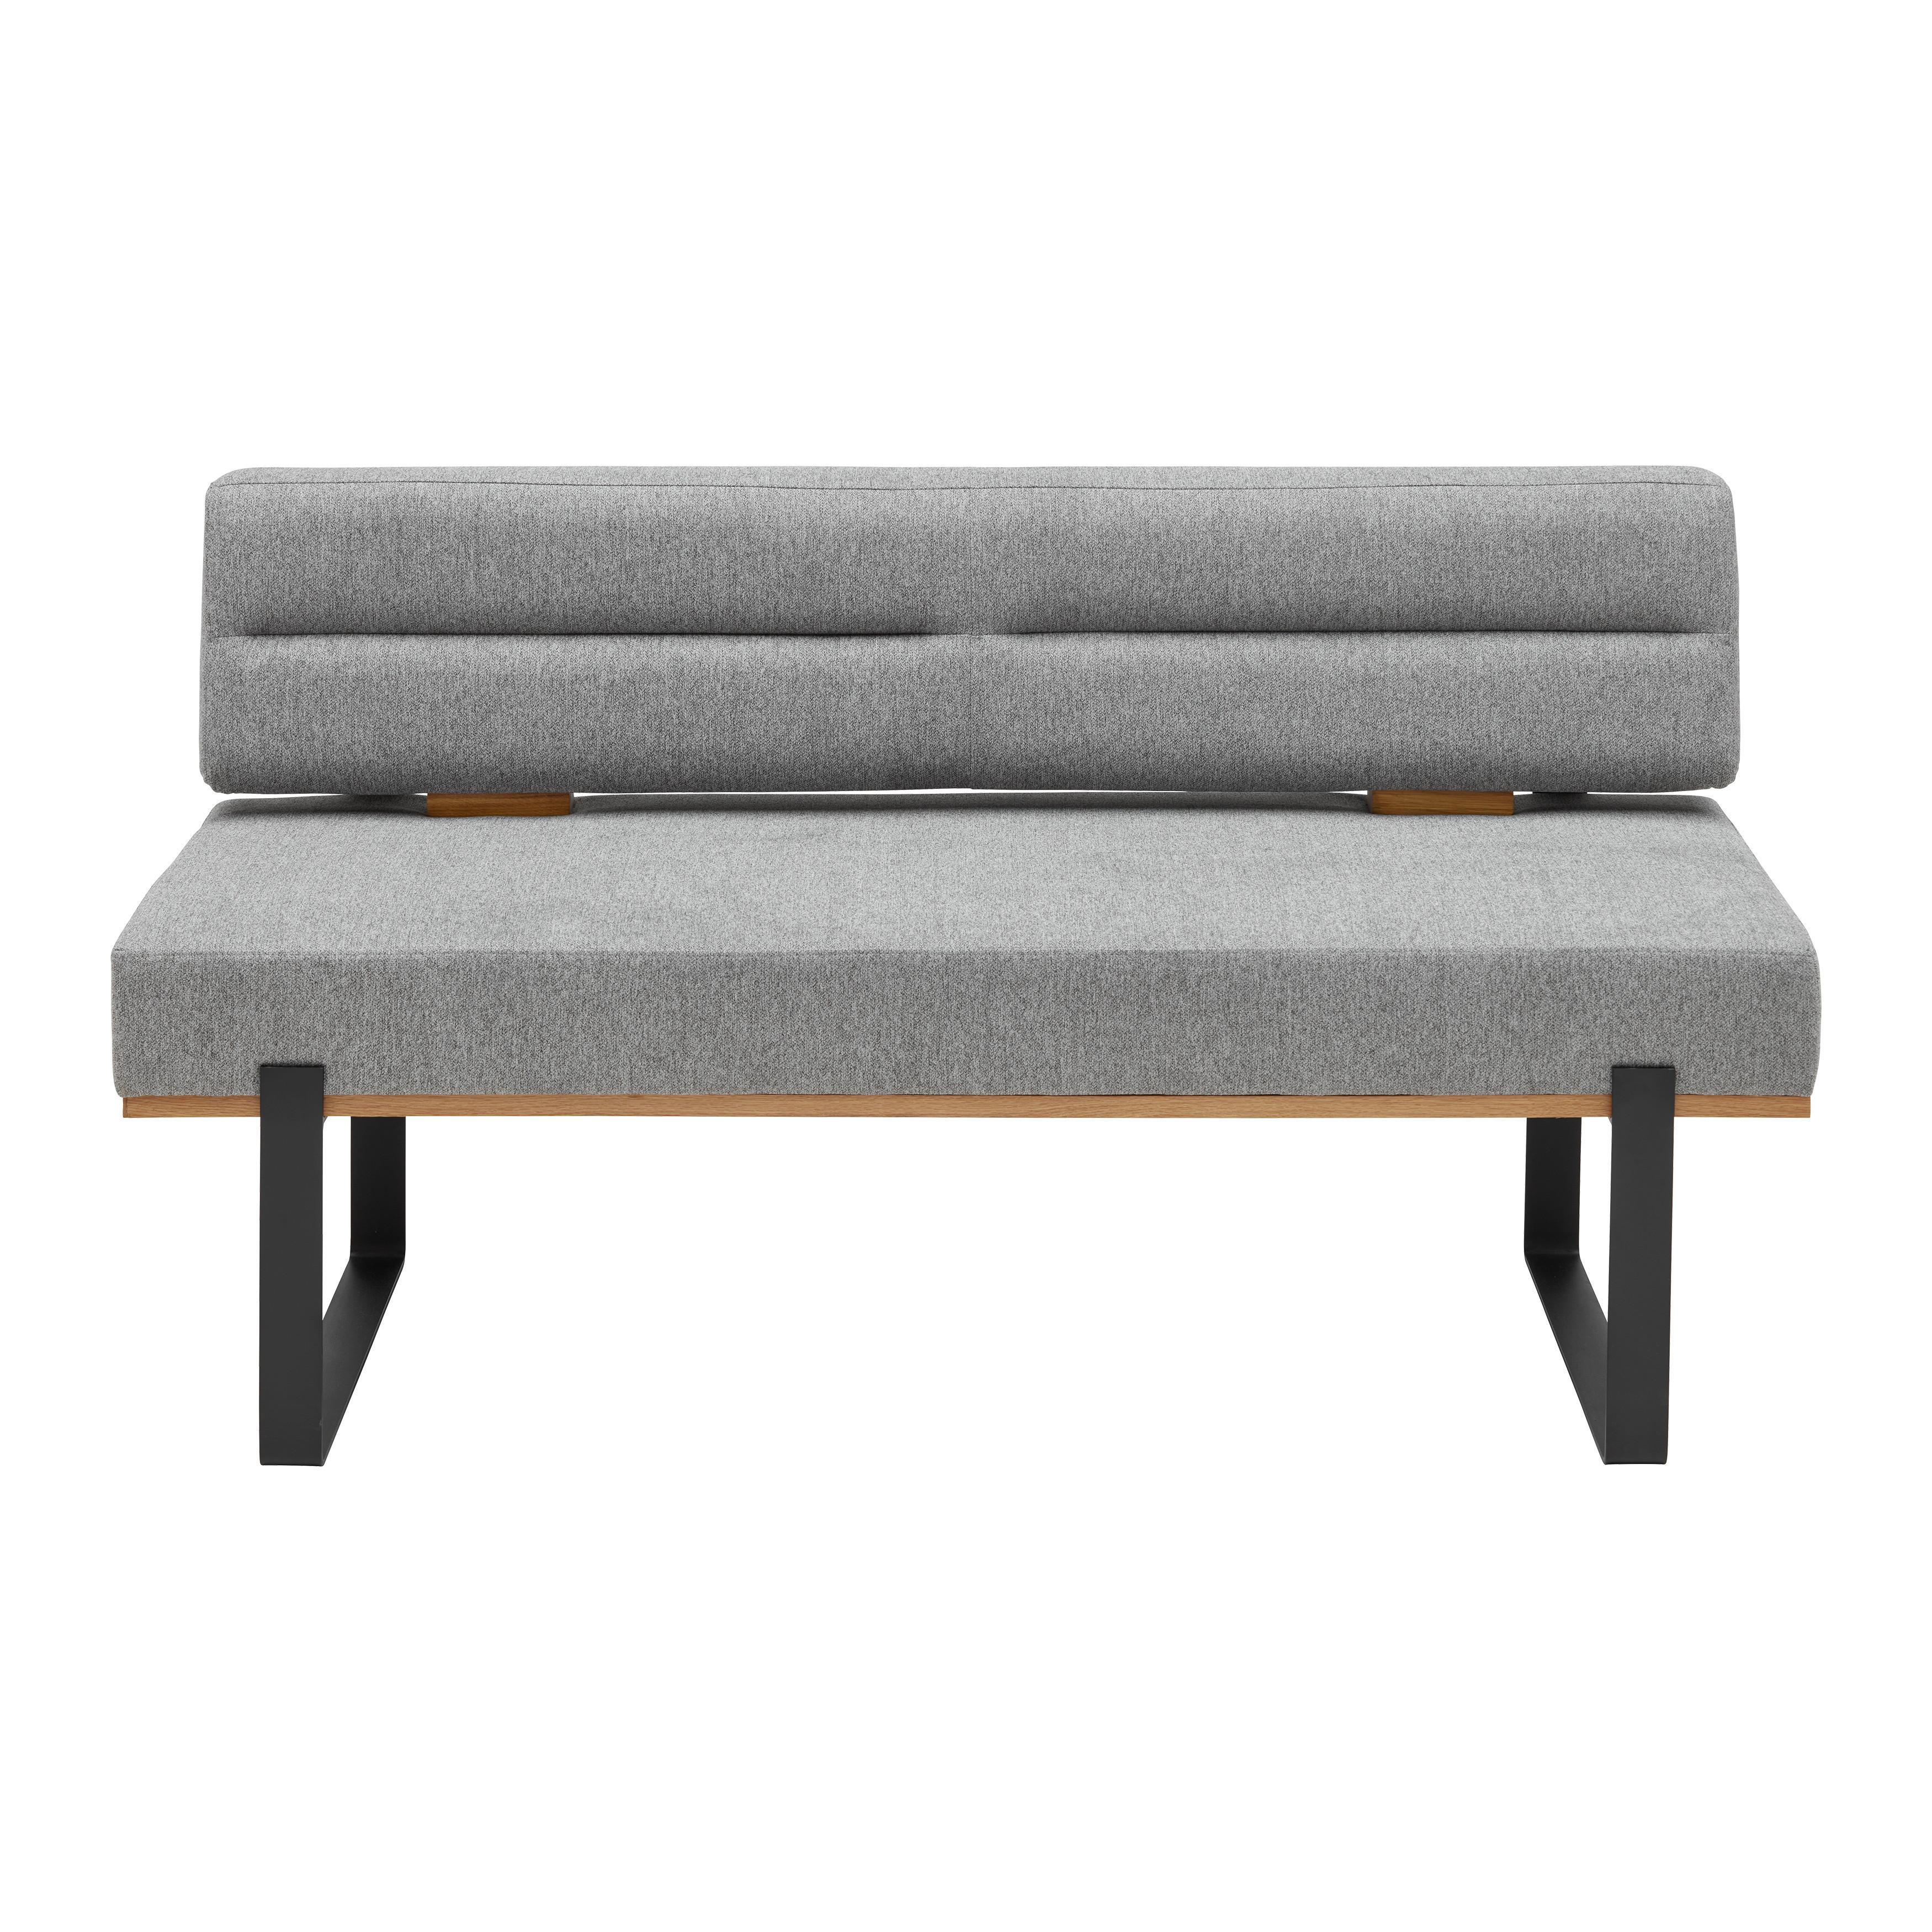 Sitzbank in Grau - Schwarz/Grau, Konventionell, Holz/Textil (160/85/60cm) - Modern Living